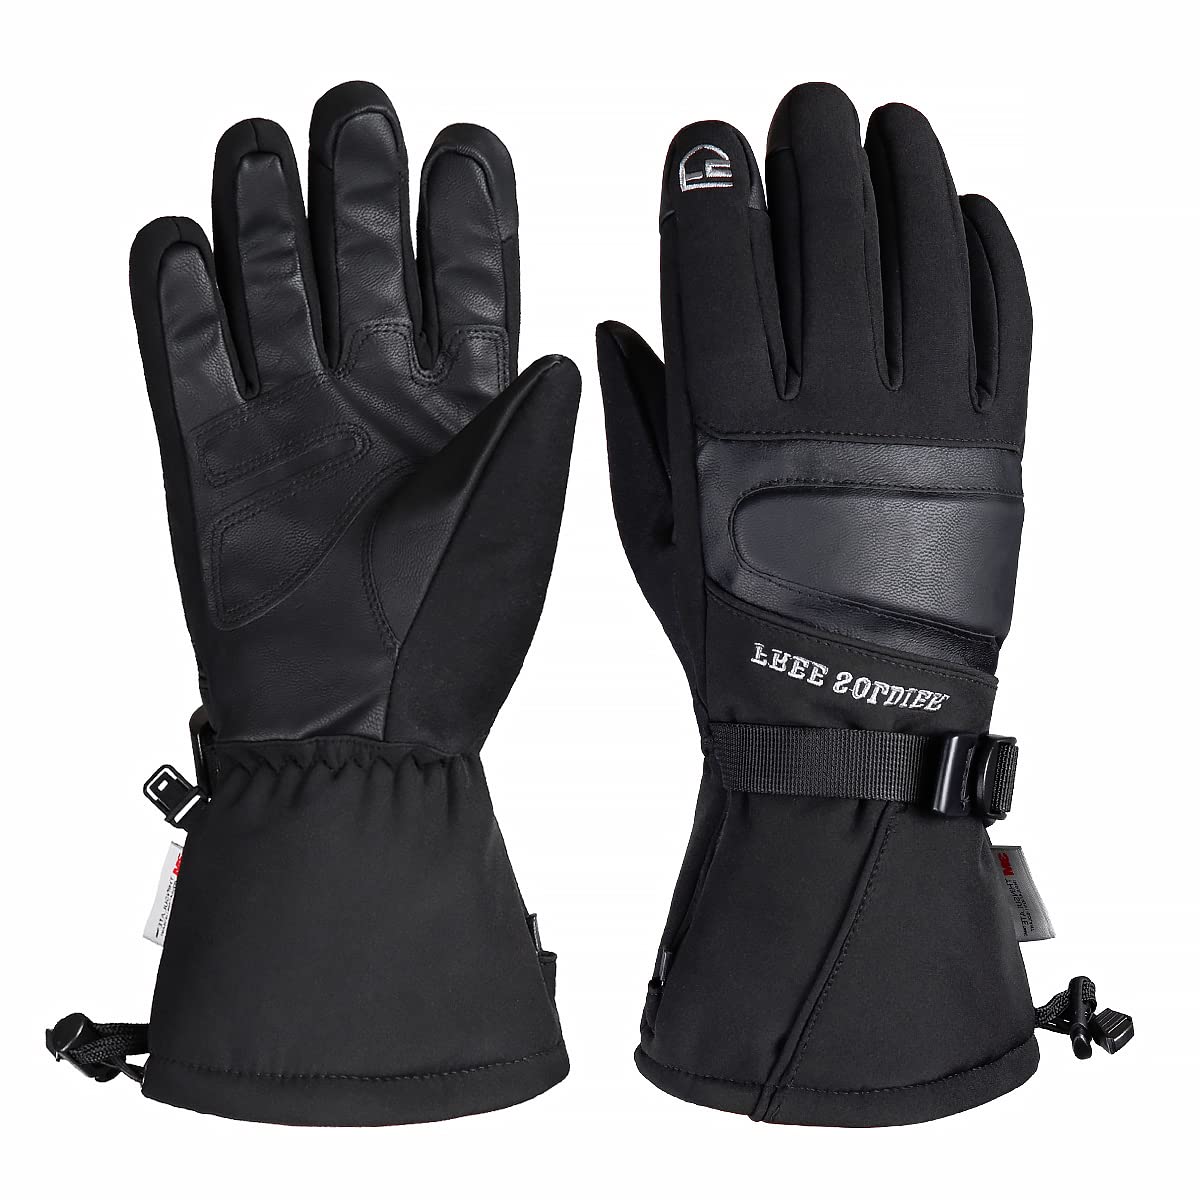 Vgo - 1 par de guantes de esquí para hombre y mujer, guantes de nieve de  invierno, guantes para exteriores, 3M Thinsulate impermeables (CA2469FW)